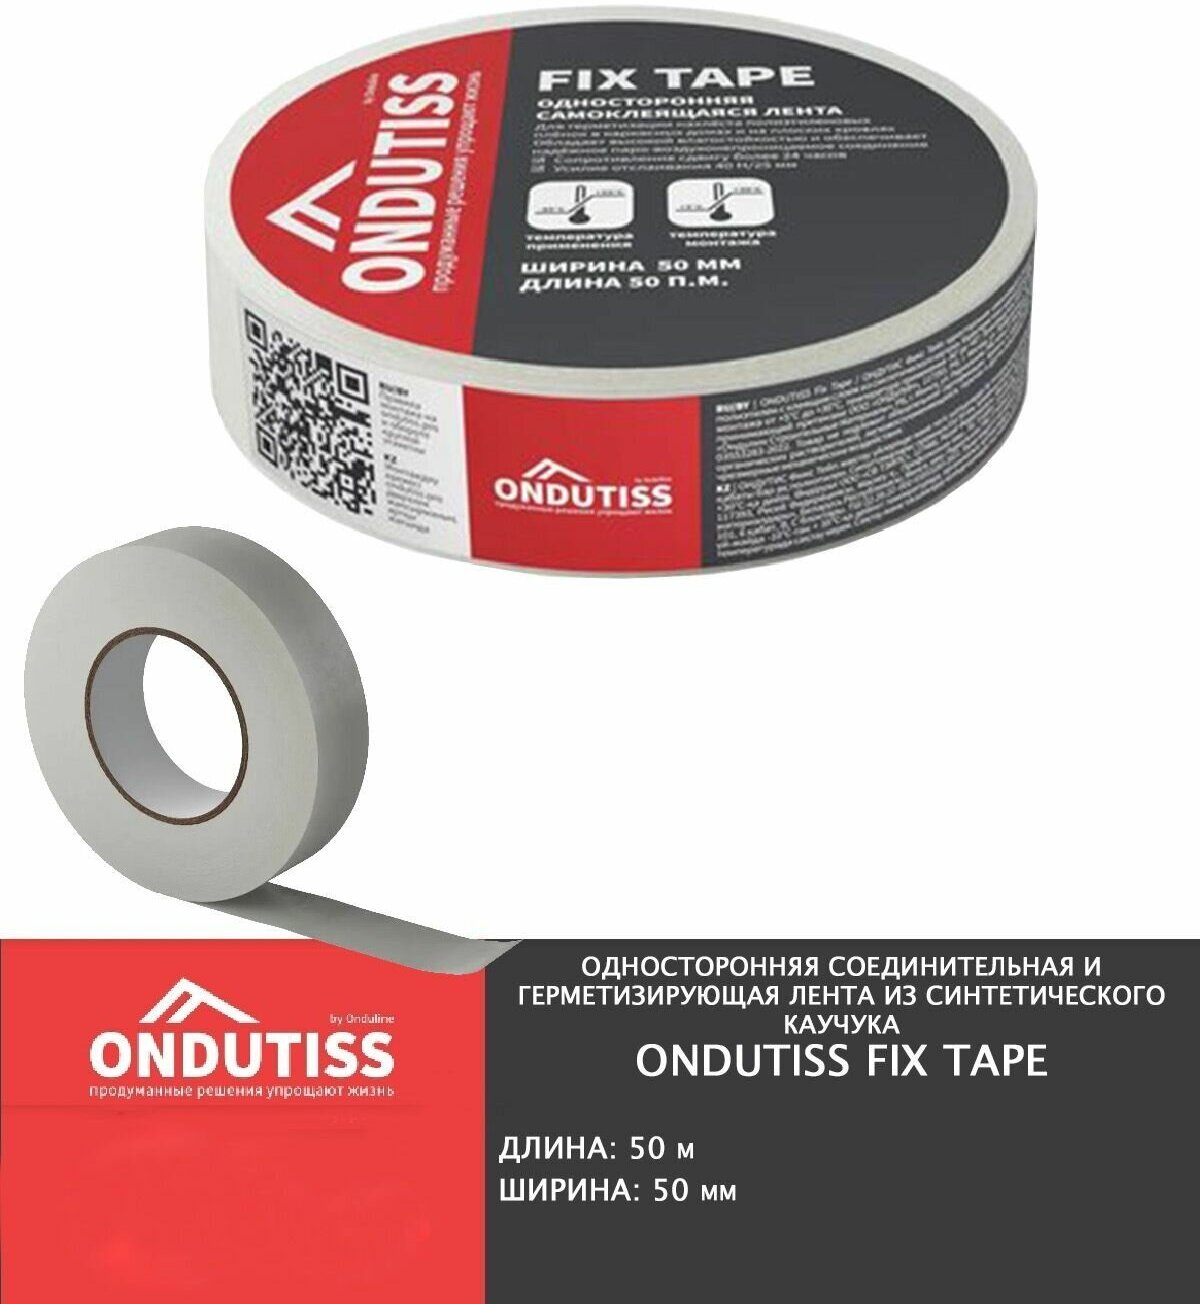 Монтажная самоклеящаяся лента ONDUTISS Fix Tape из синтетического каучука 50м*50мм, шт